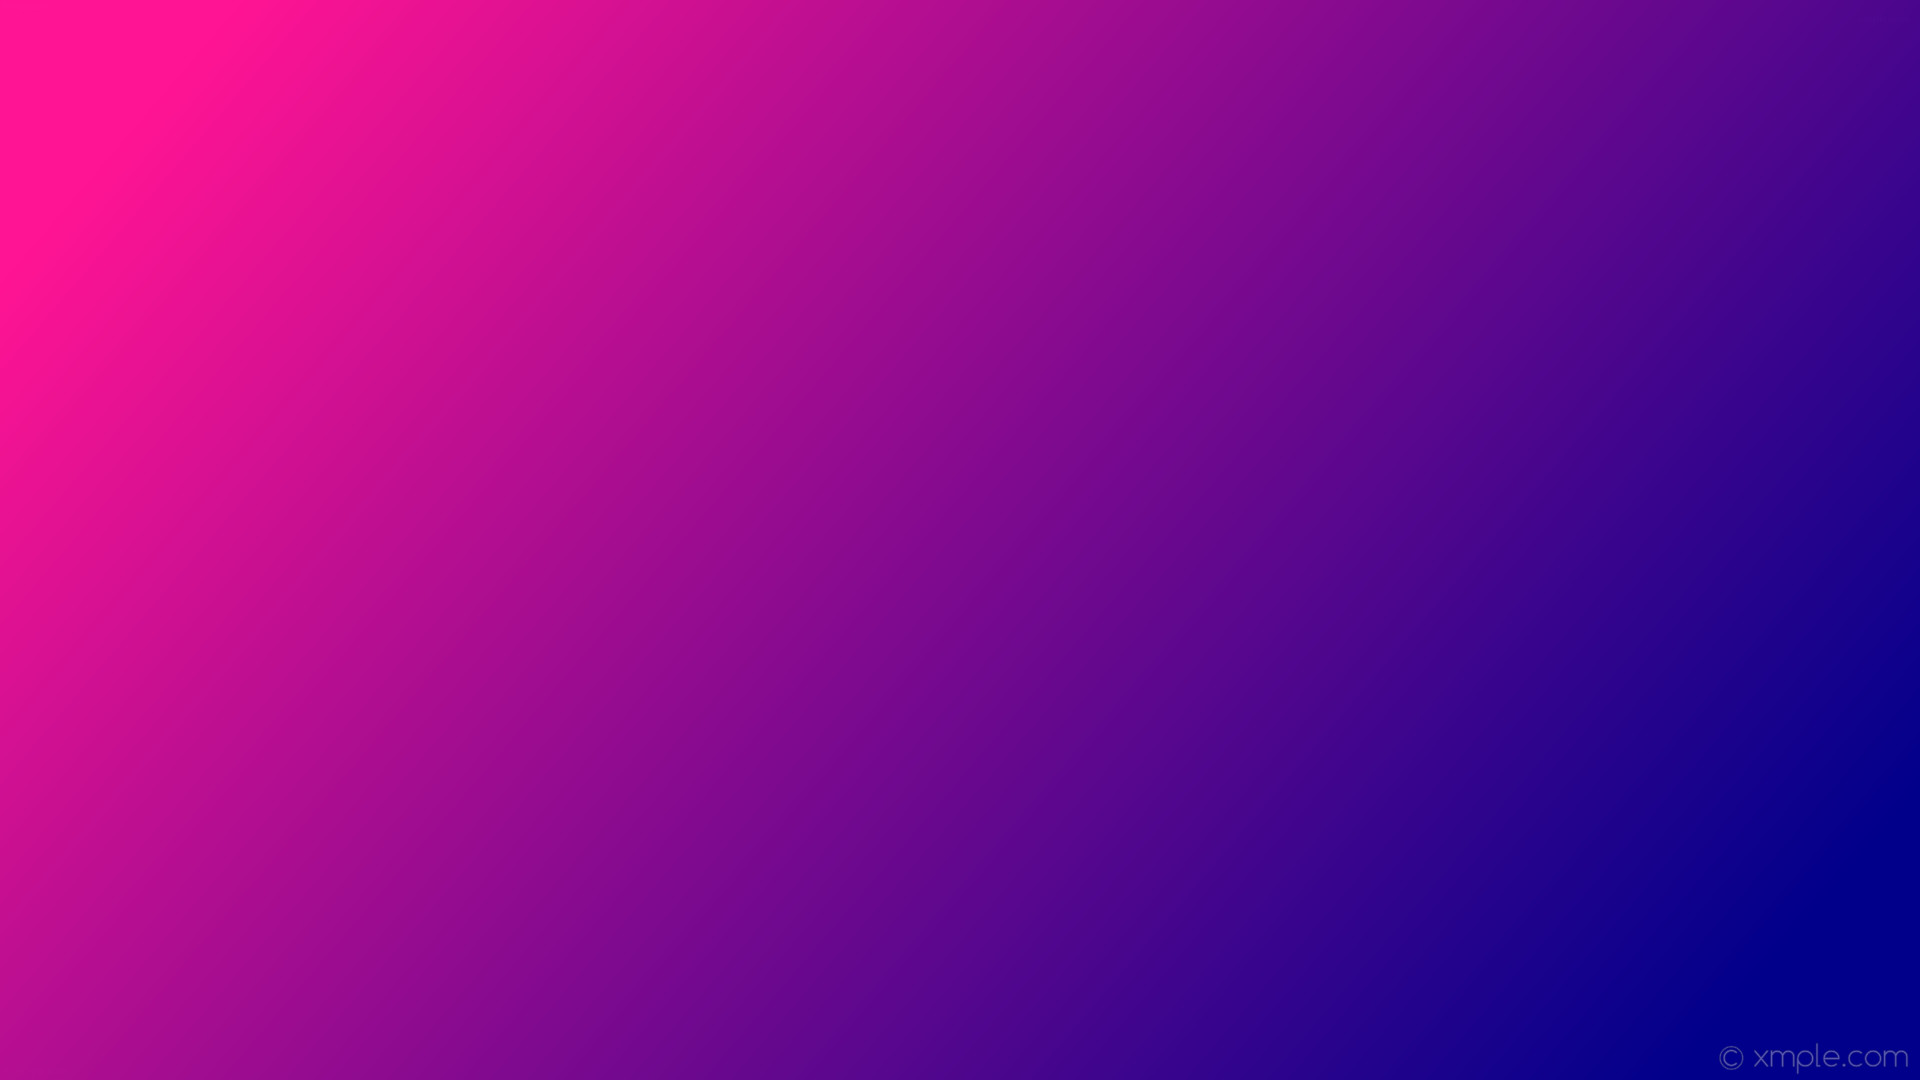 1920x1080 wallpaper blue linear gradient pink deep pink dark blue #ff1493 #00008b 165Â°